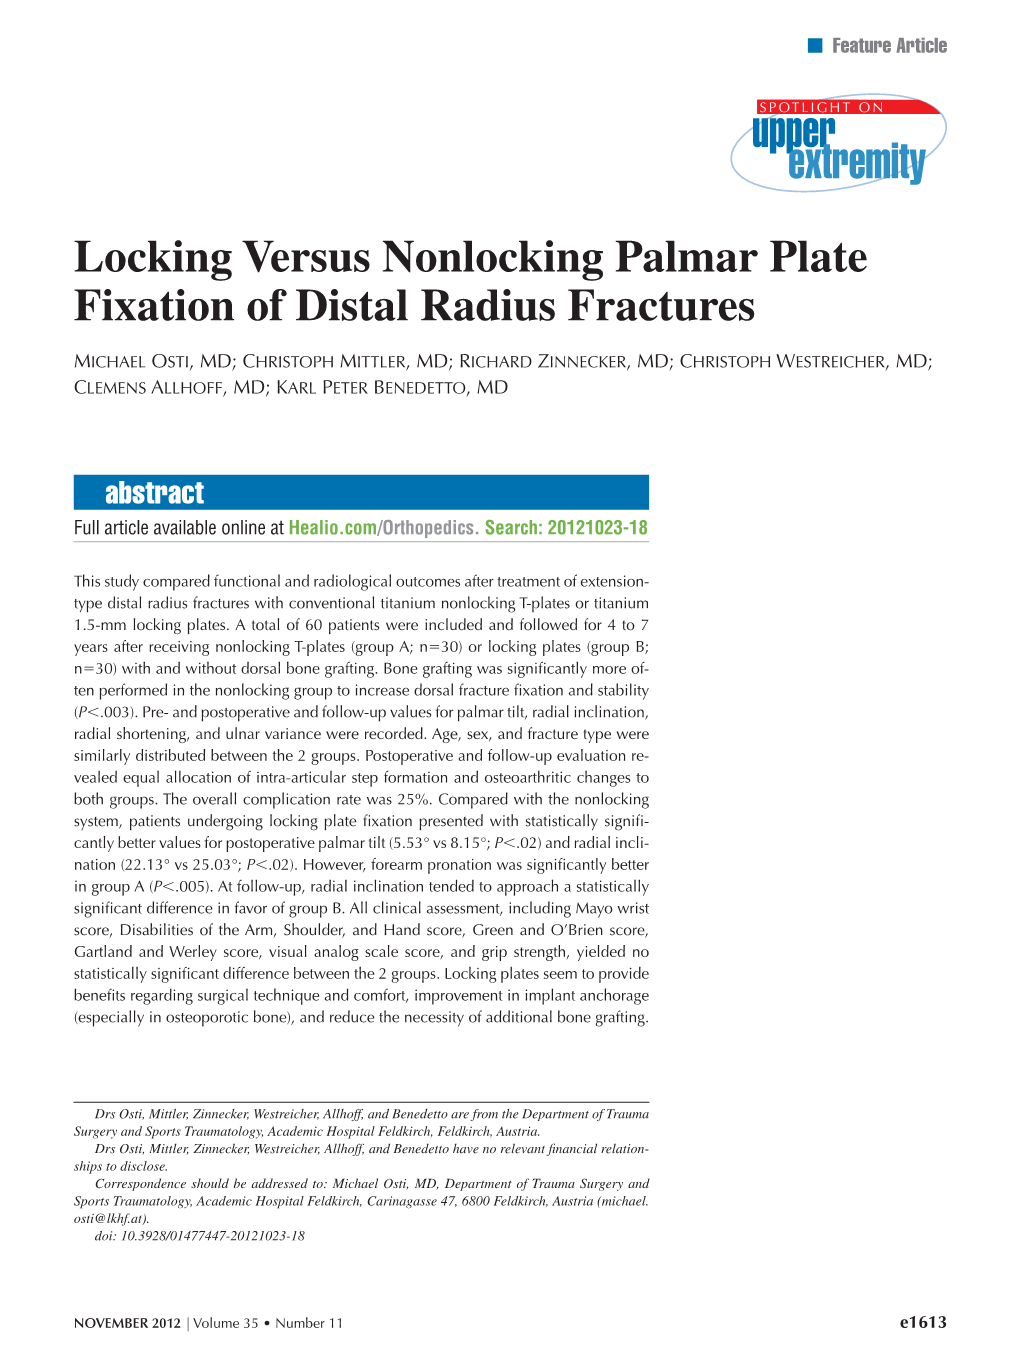 Locking Versus Nonlocking Palmar Plate Fixation of Distal Radius Fractures